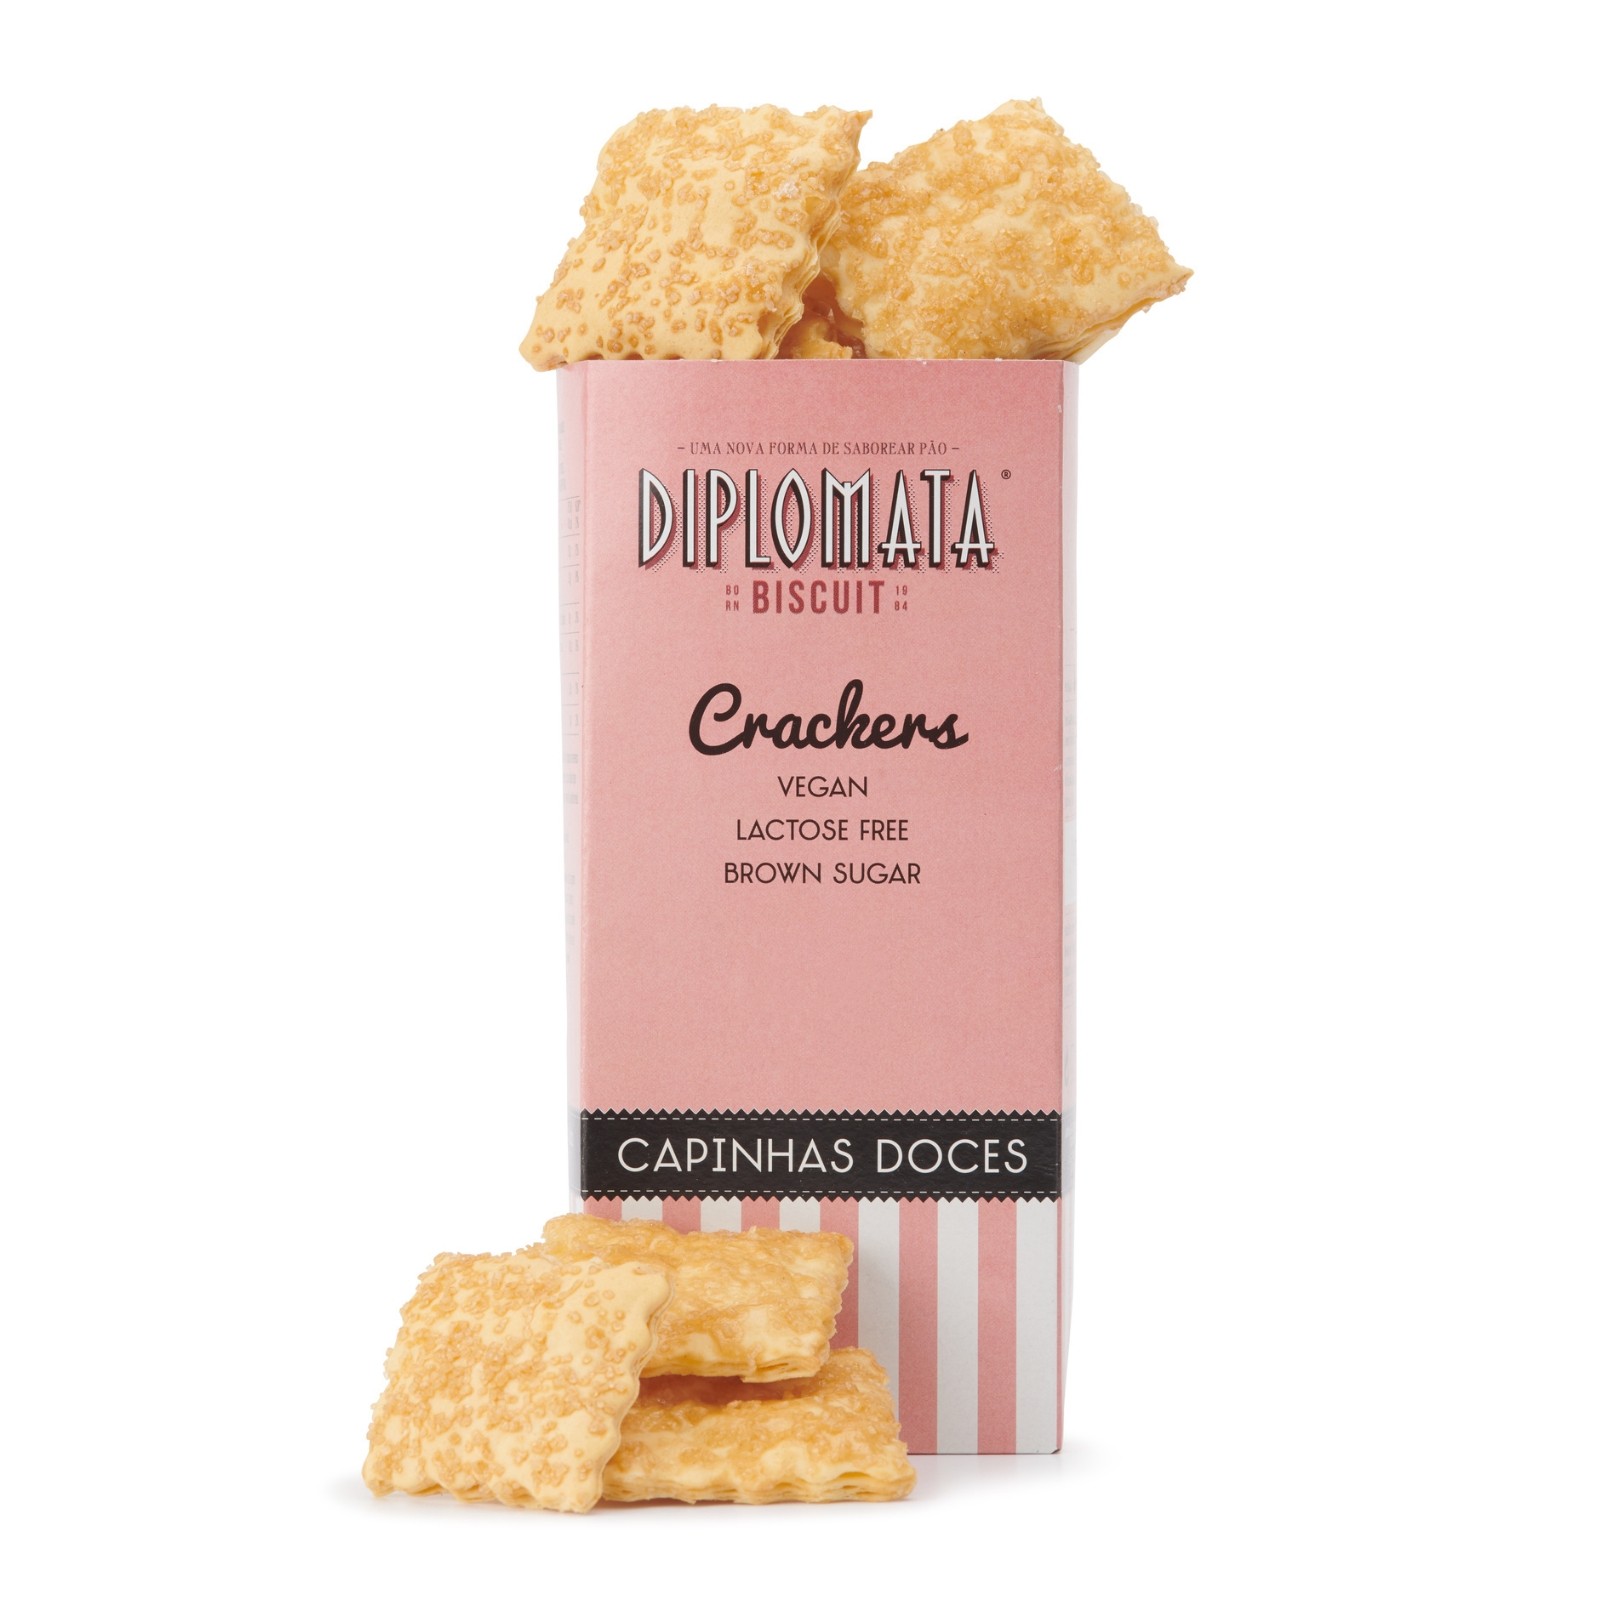 Diplomata Capinhas Doces Crackers